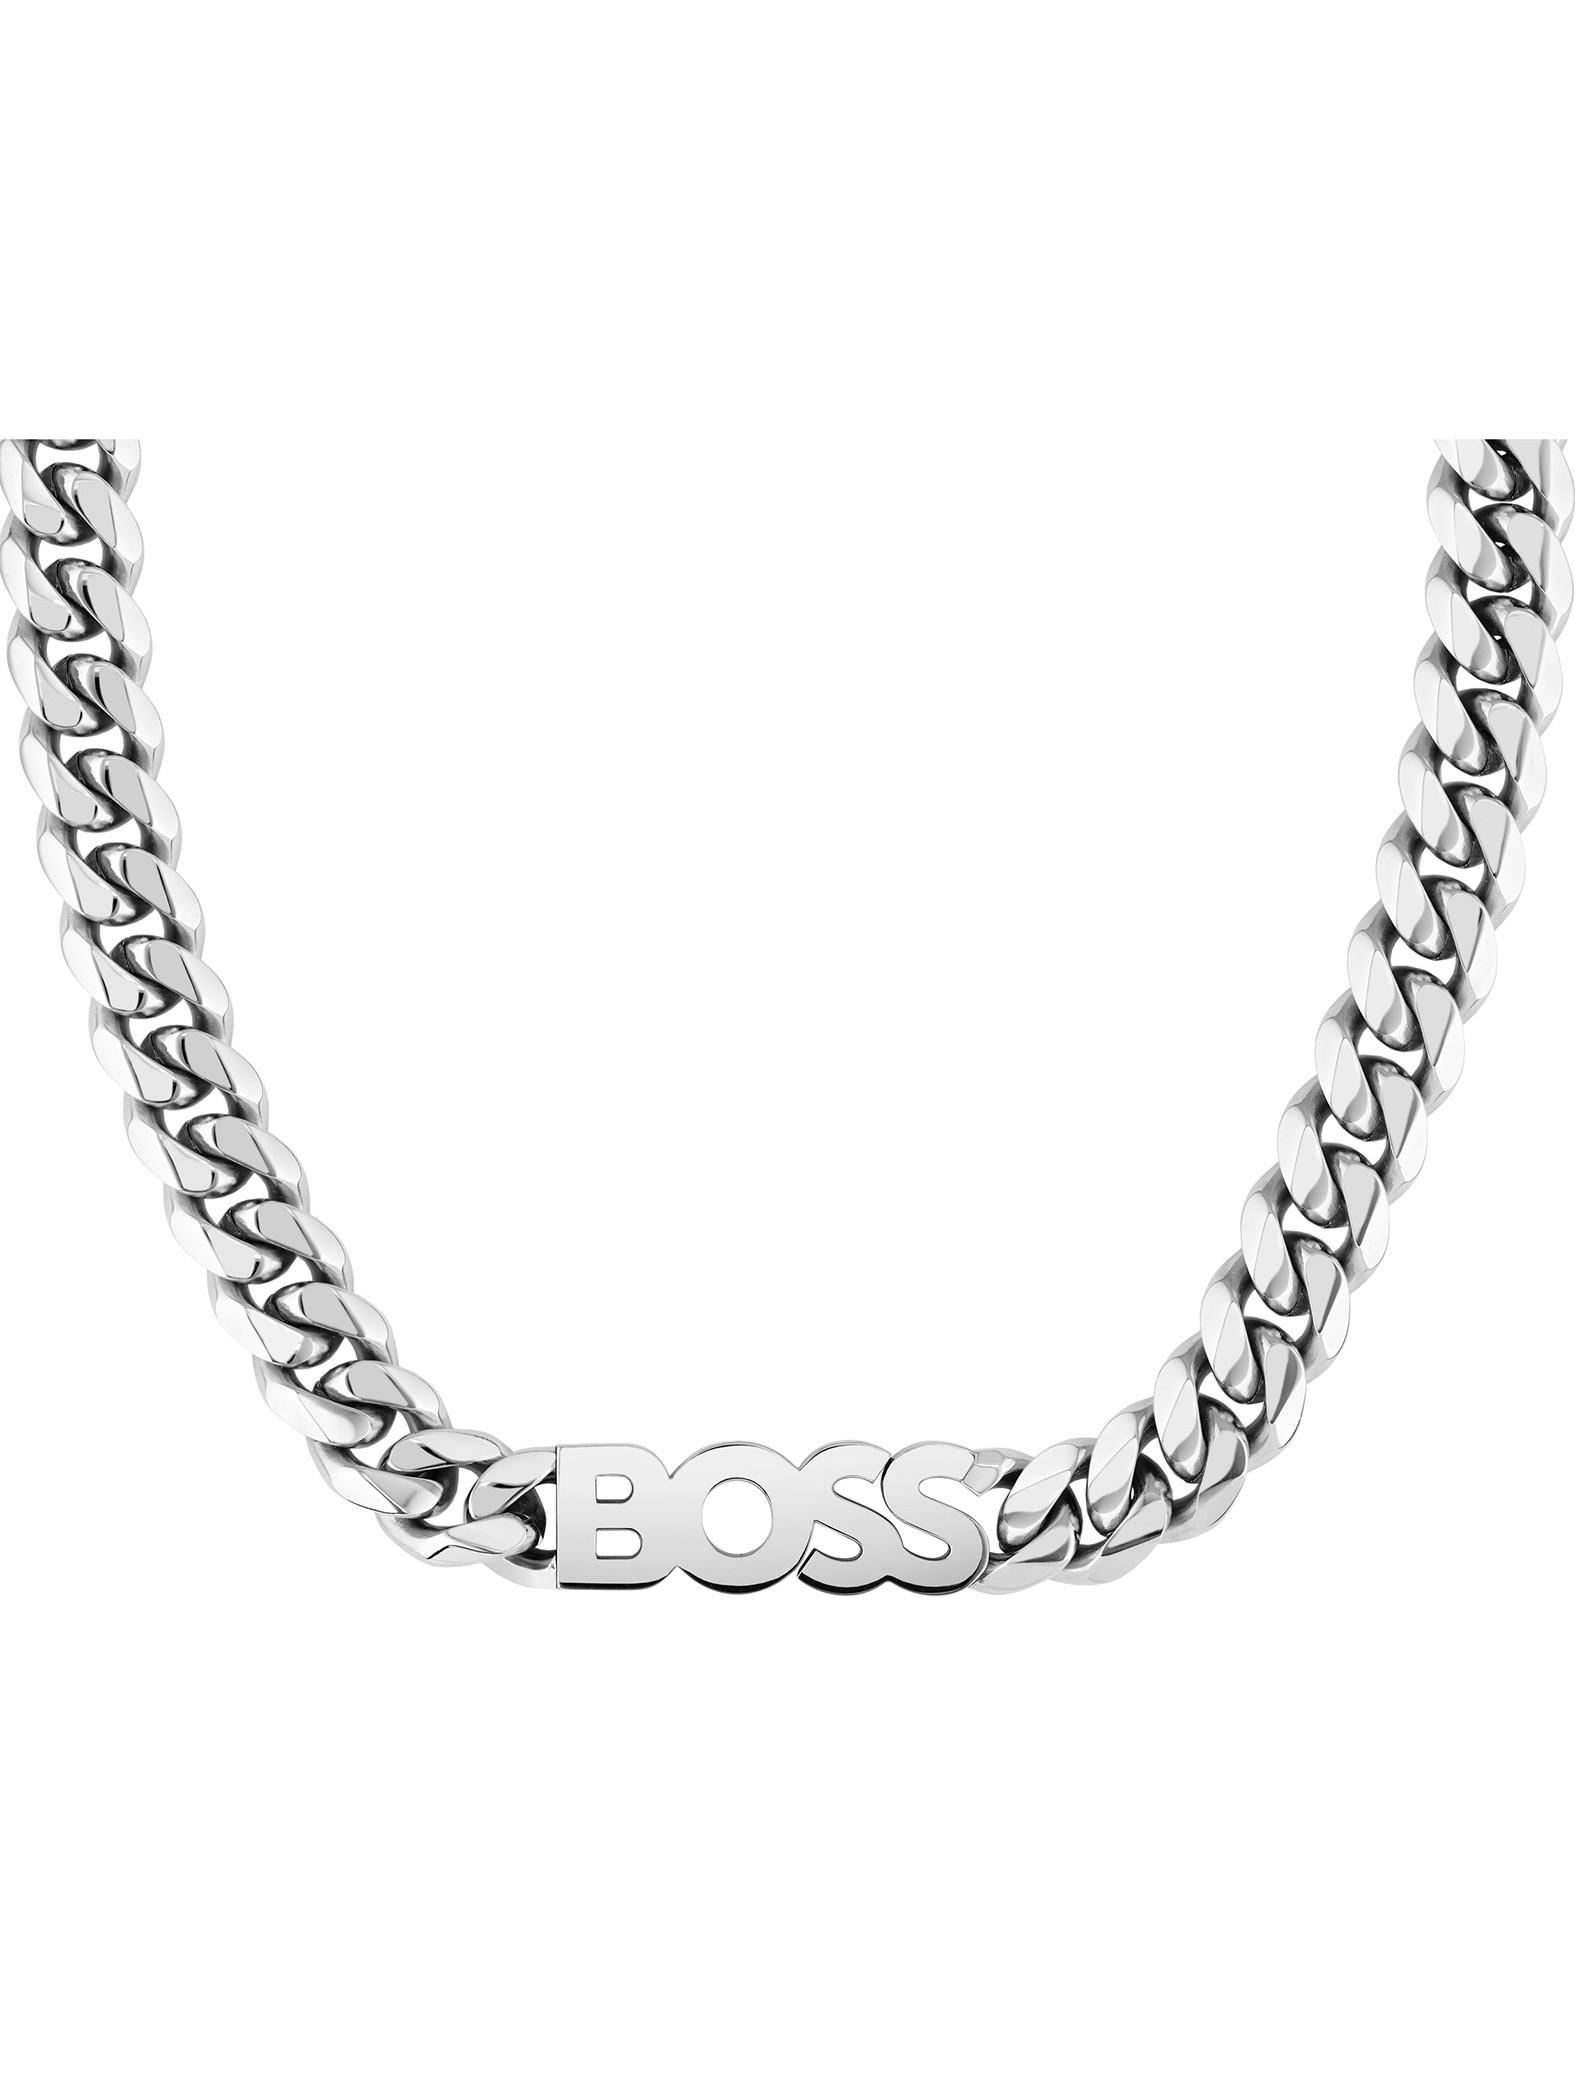 BOSS by HUGO BOSS Carter Pendant Necklace in Metallic for Men | Lyst